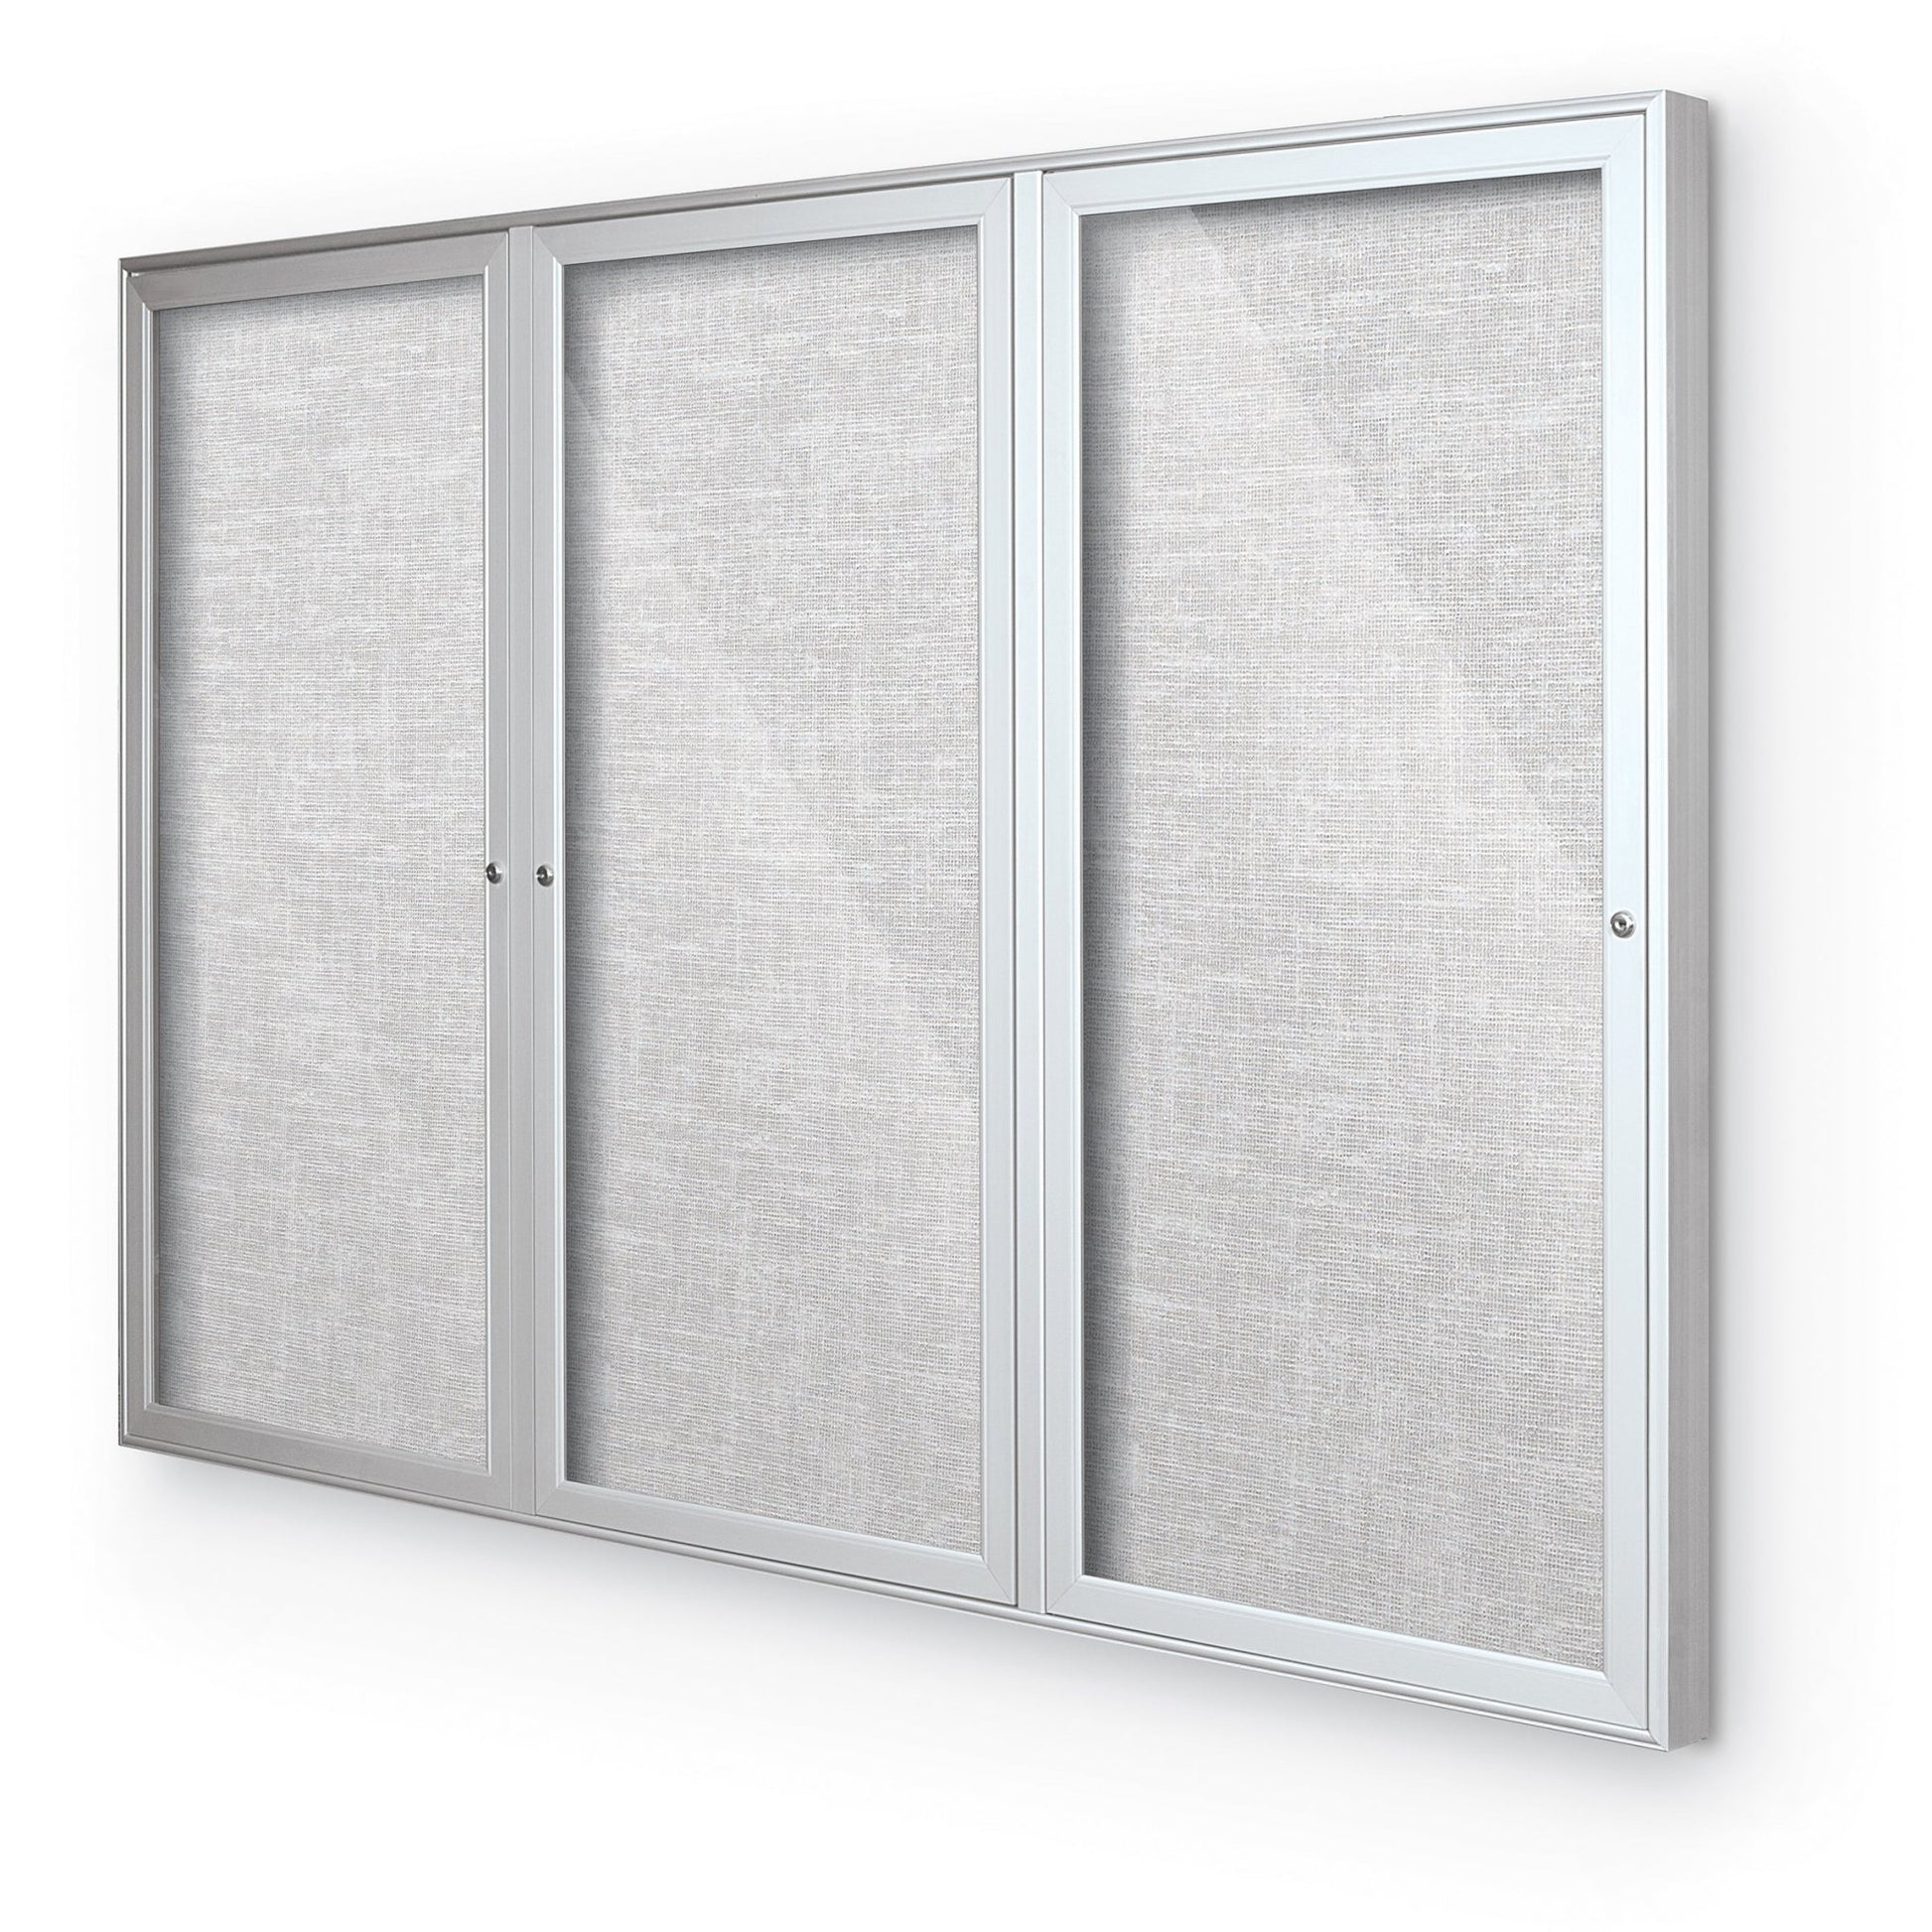 Mooreco Indoor Enclosed Bulletin Board Cabinet - 1, 2 or 3 Door - Silver Aluminum Trim - SchoolOutlet